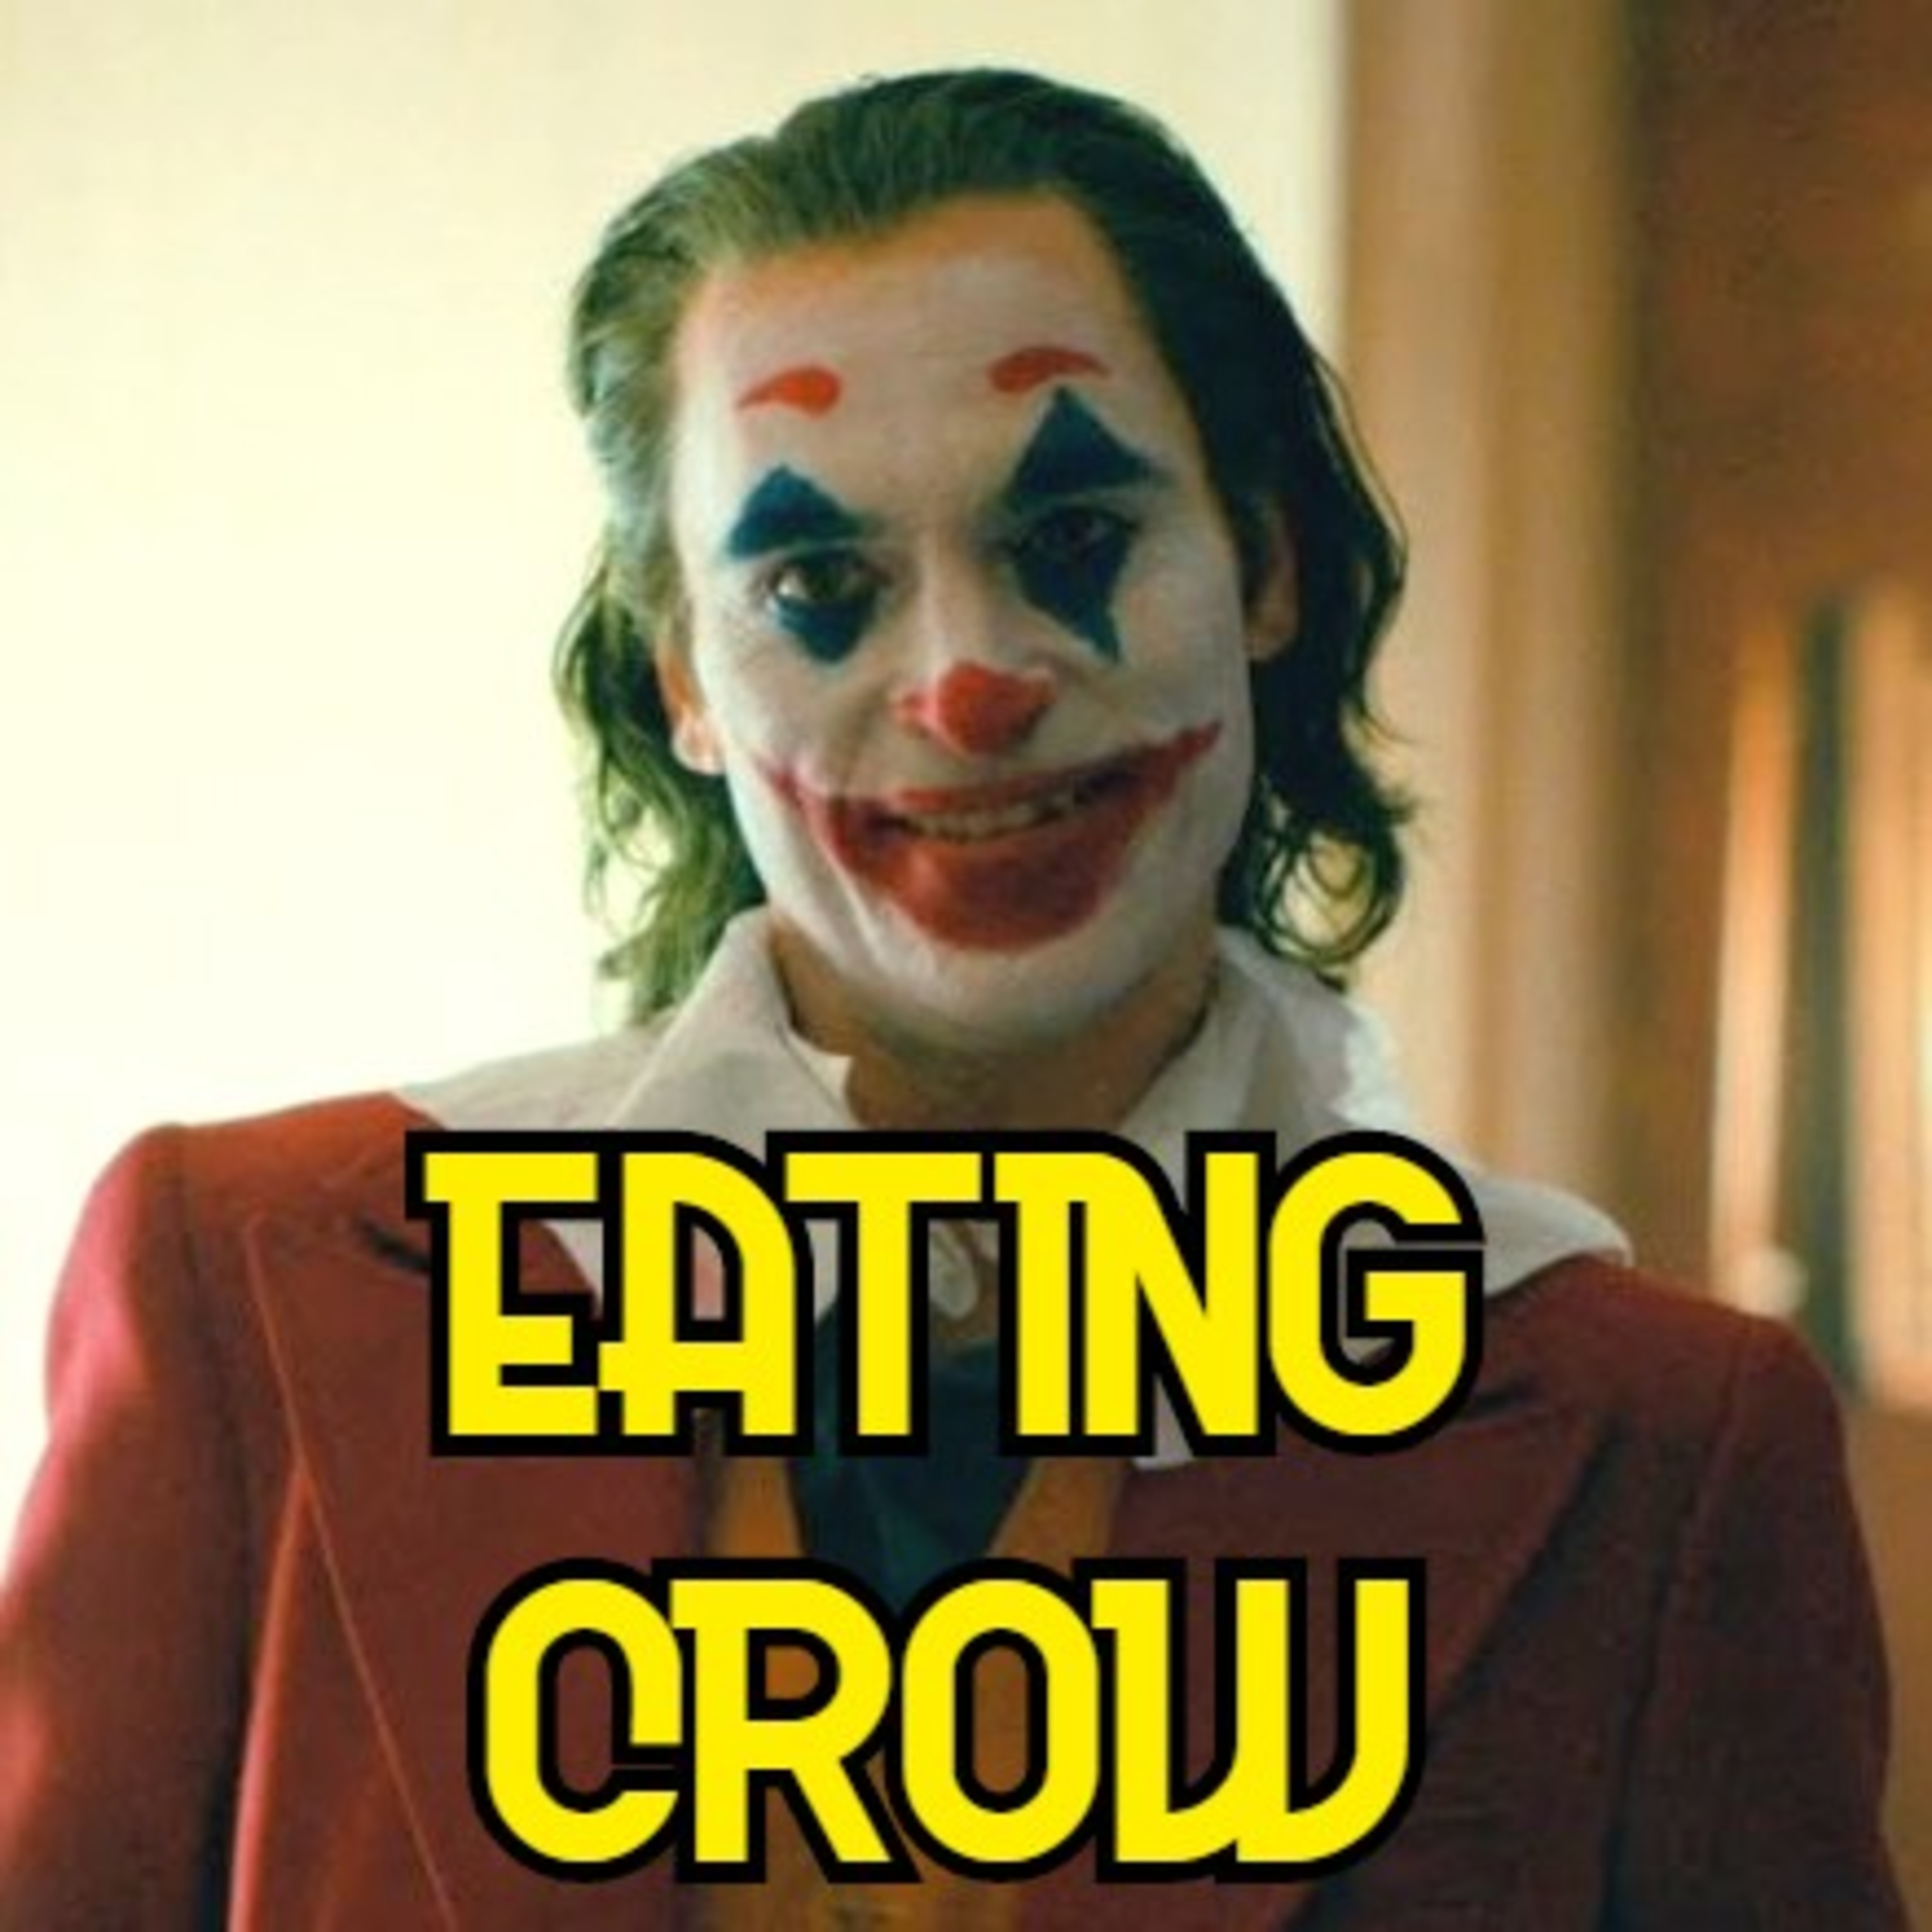 317 Eating Crow